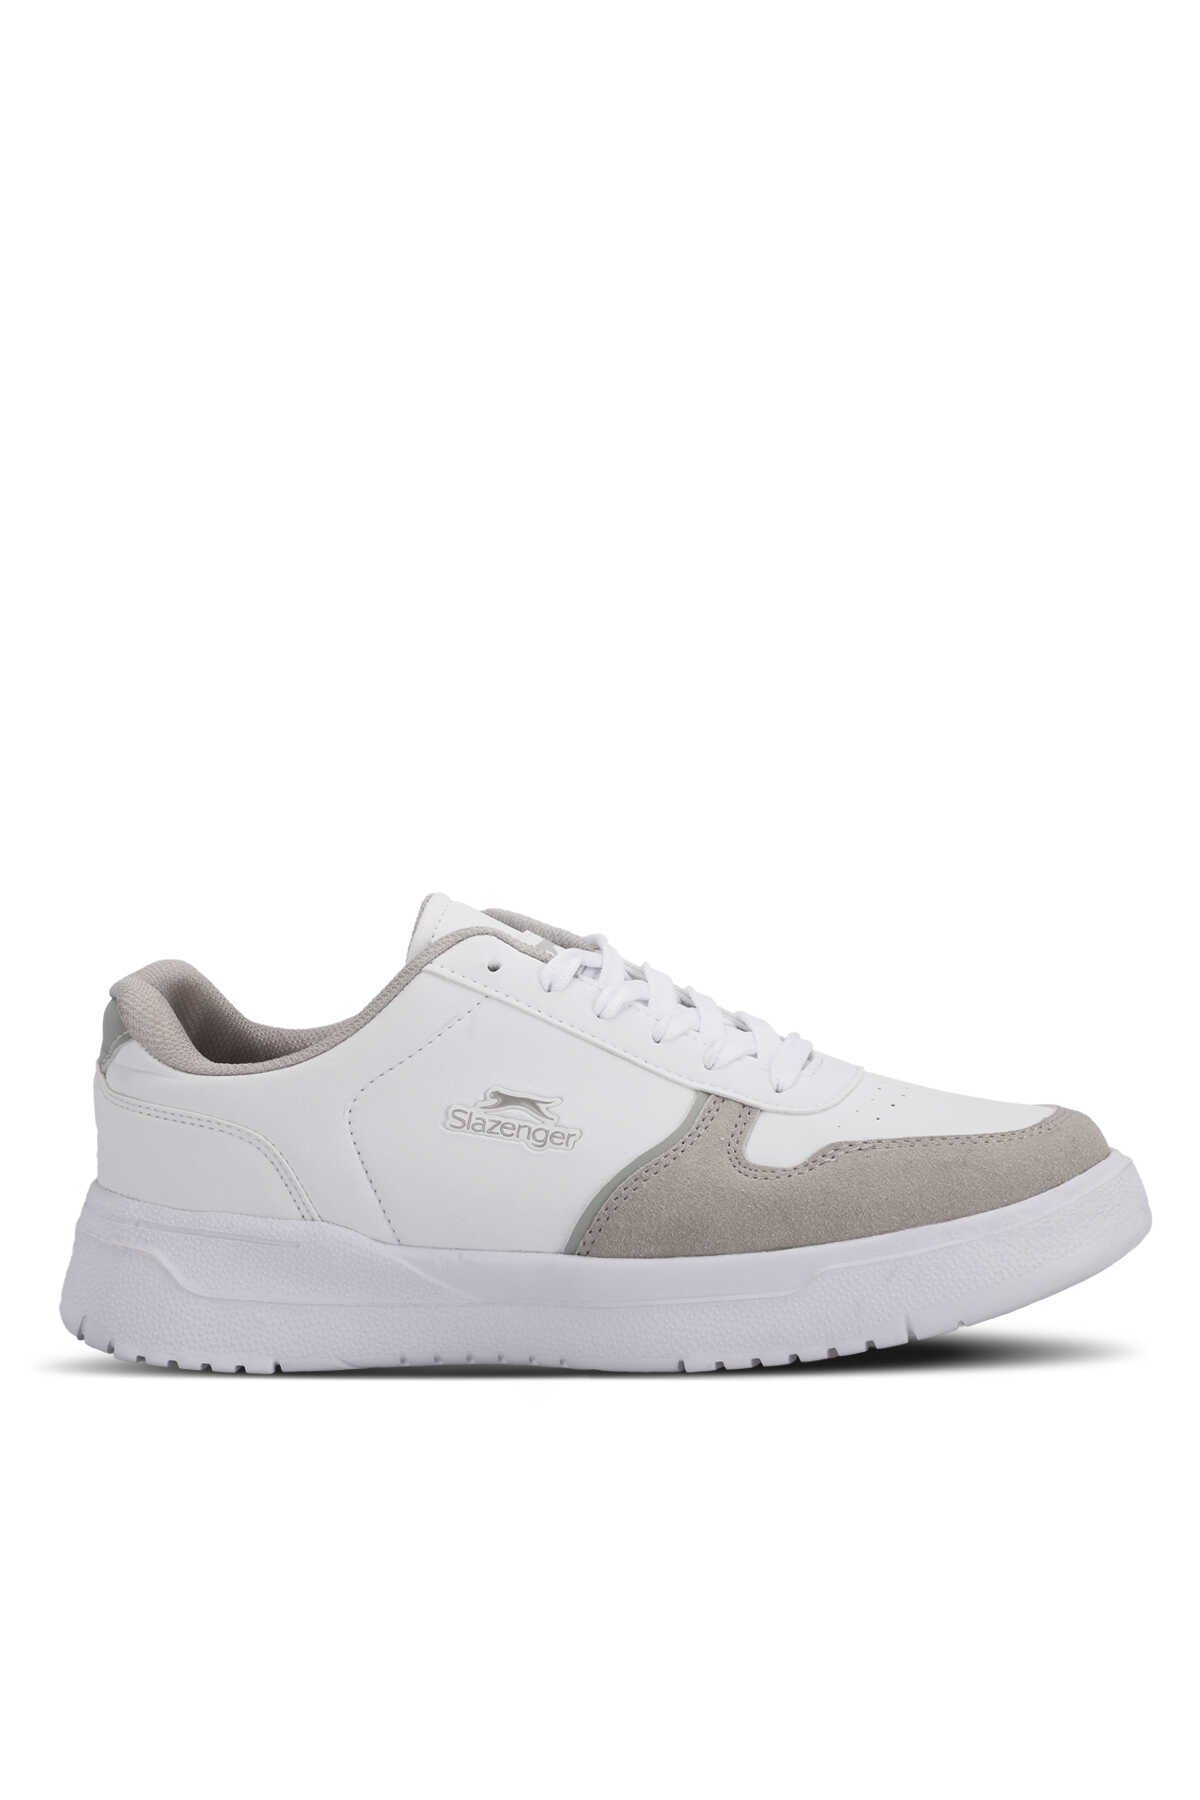 Slazenger - Slazenger MASK I Erkek Sneaker Ayakkabı Beyaz